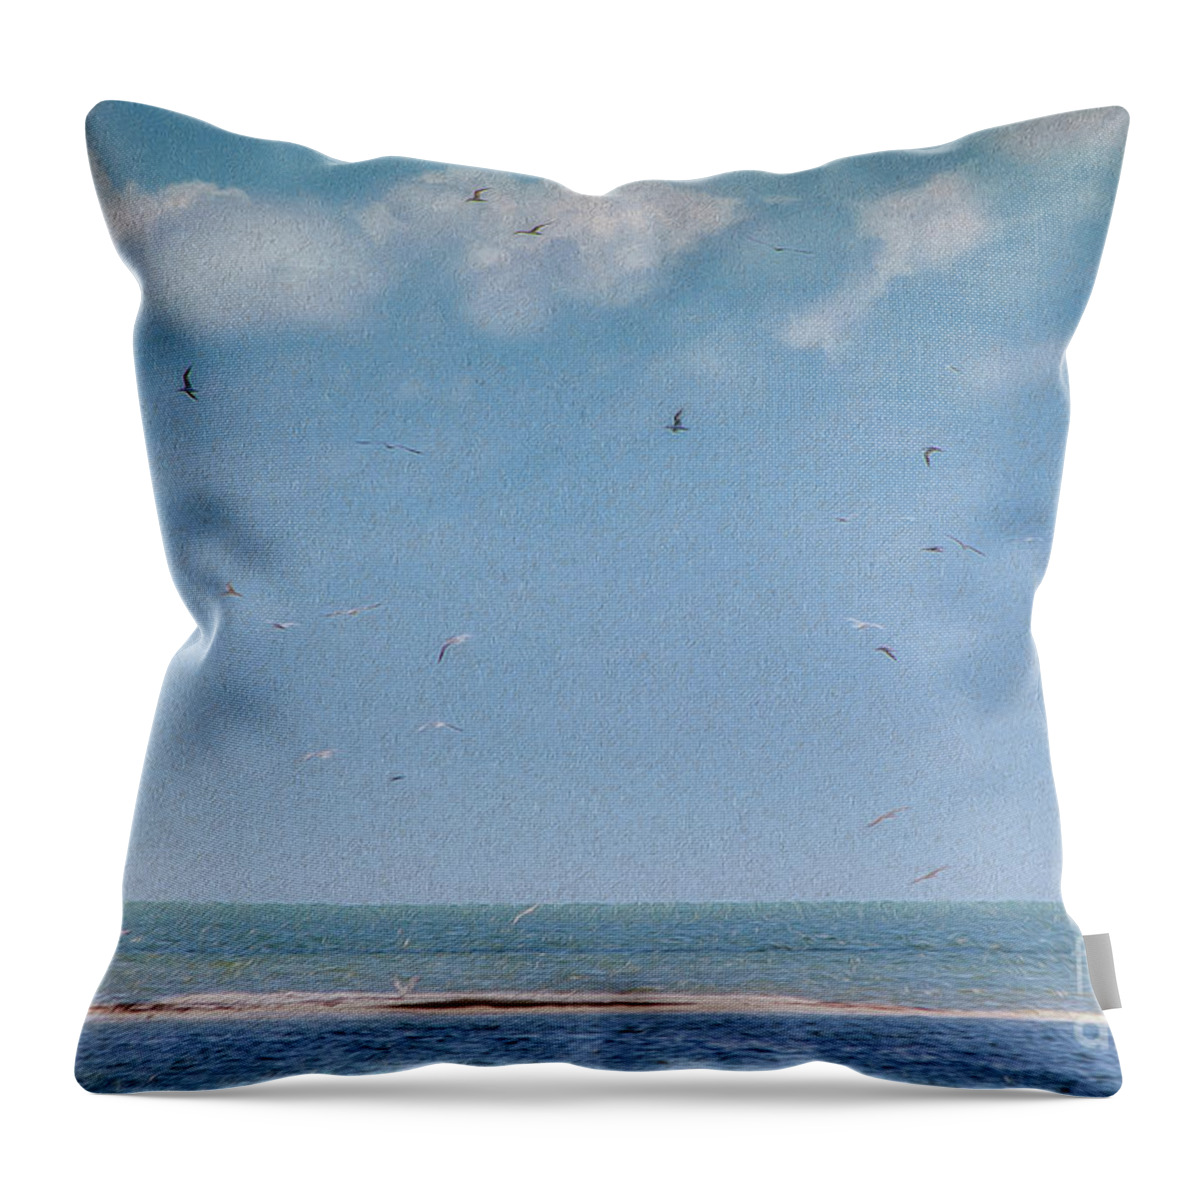 Blue Sky Throw Pillow featuring the photograph The Sandbar by Patti Powers